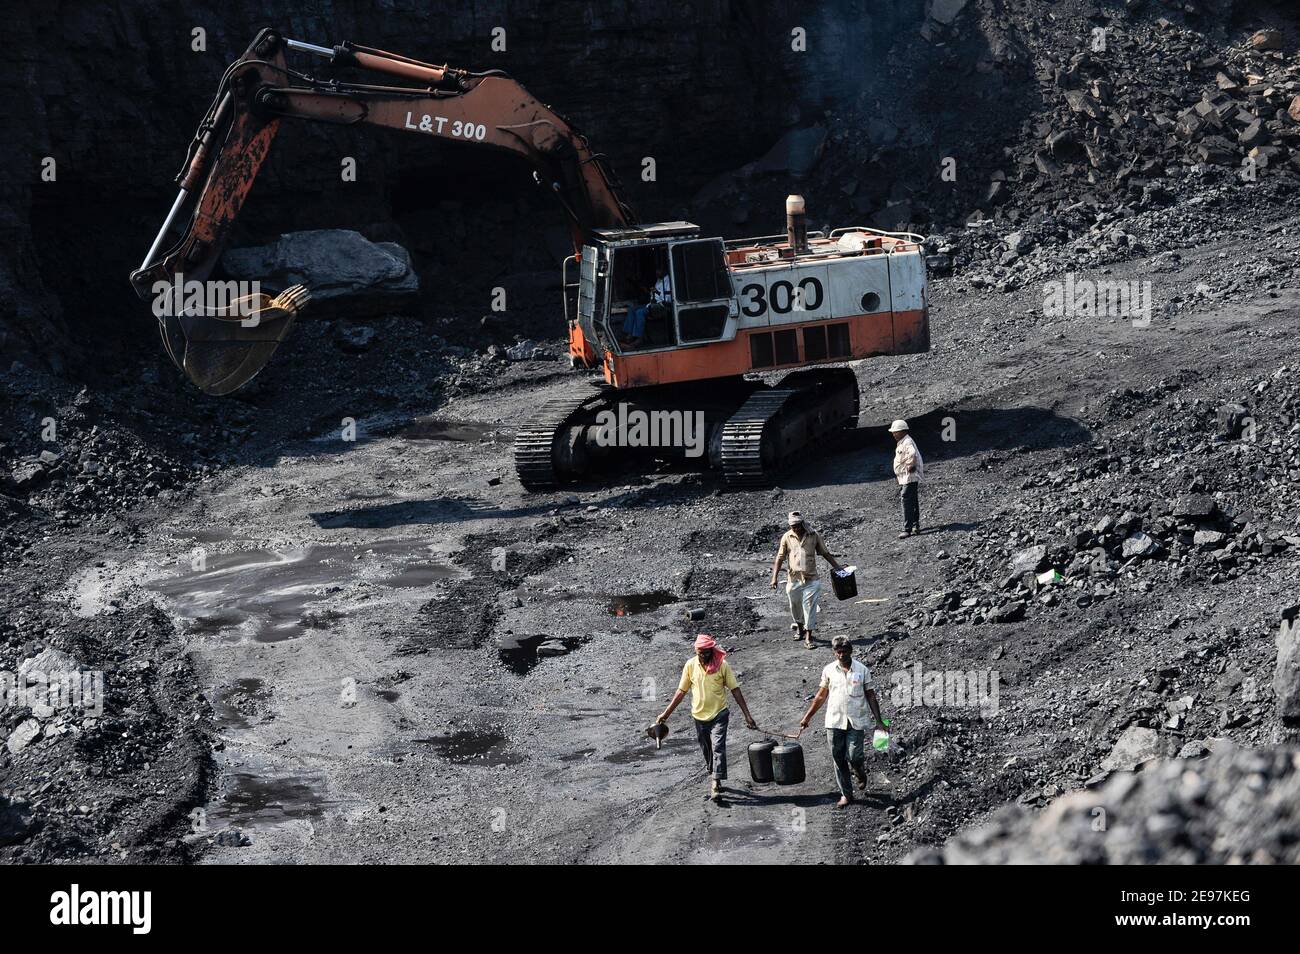 INDIA Dhanbad, estrazione di carbone a getto aperto di BCCL Ltd una società di CARBONE INDIA , L&T digger / INDIEN Dhanbad , offener Kohle Tagebau von BCCL Ltd. Ein Tochterunternehmen von Coal India Foto Stock